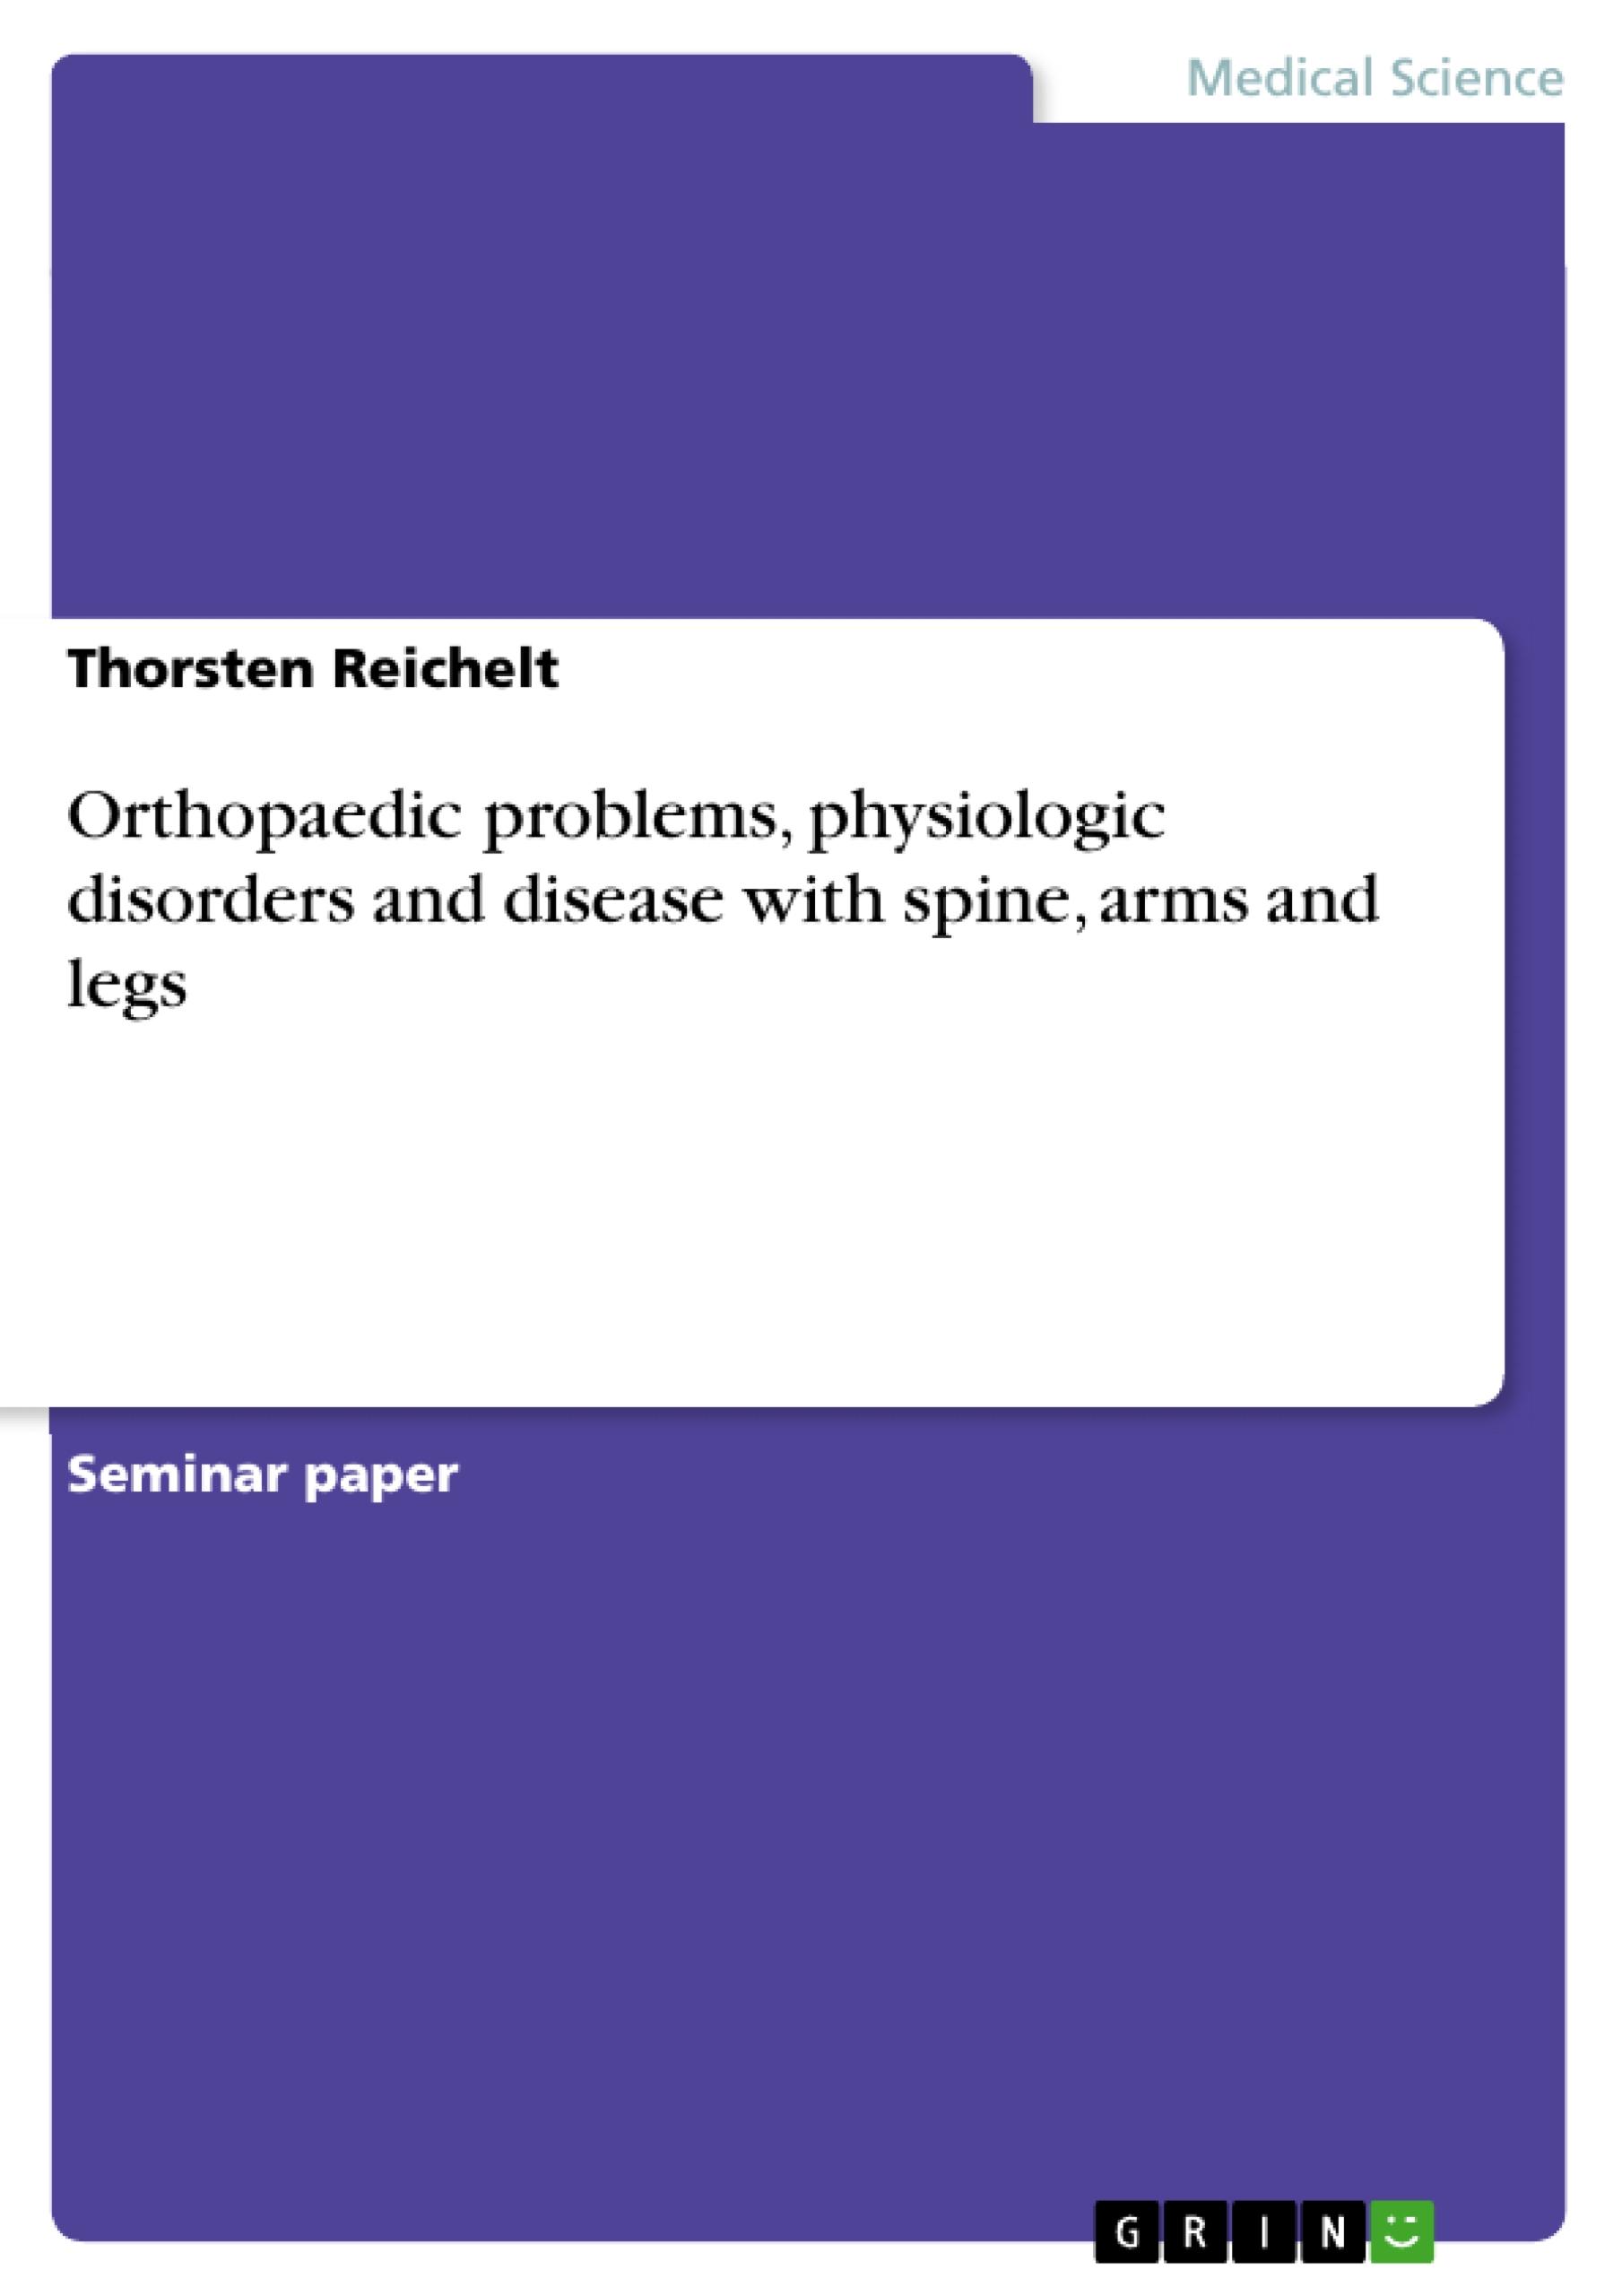 Orthopaedic problems, physiologic disorders and disease with spine, arms and legs / Thorsten Reichelt / Taschenbuch / Booklet / 16 S. / Englisch / 2010 / GRIN Verlag / EAN 9783640675241 - Reichelt, Thorsten